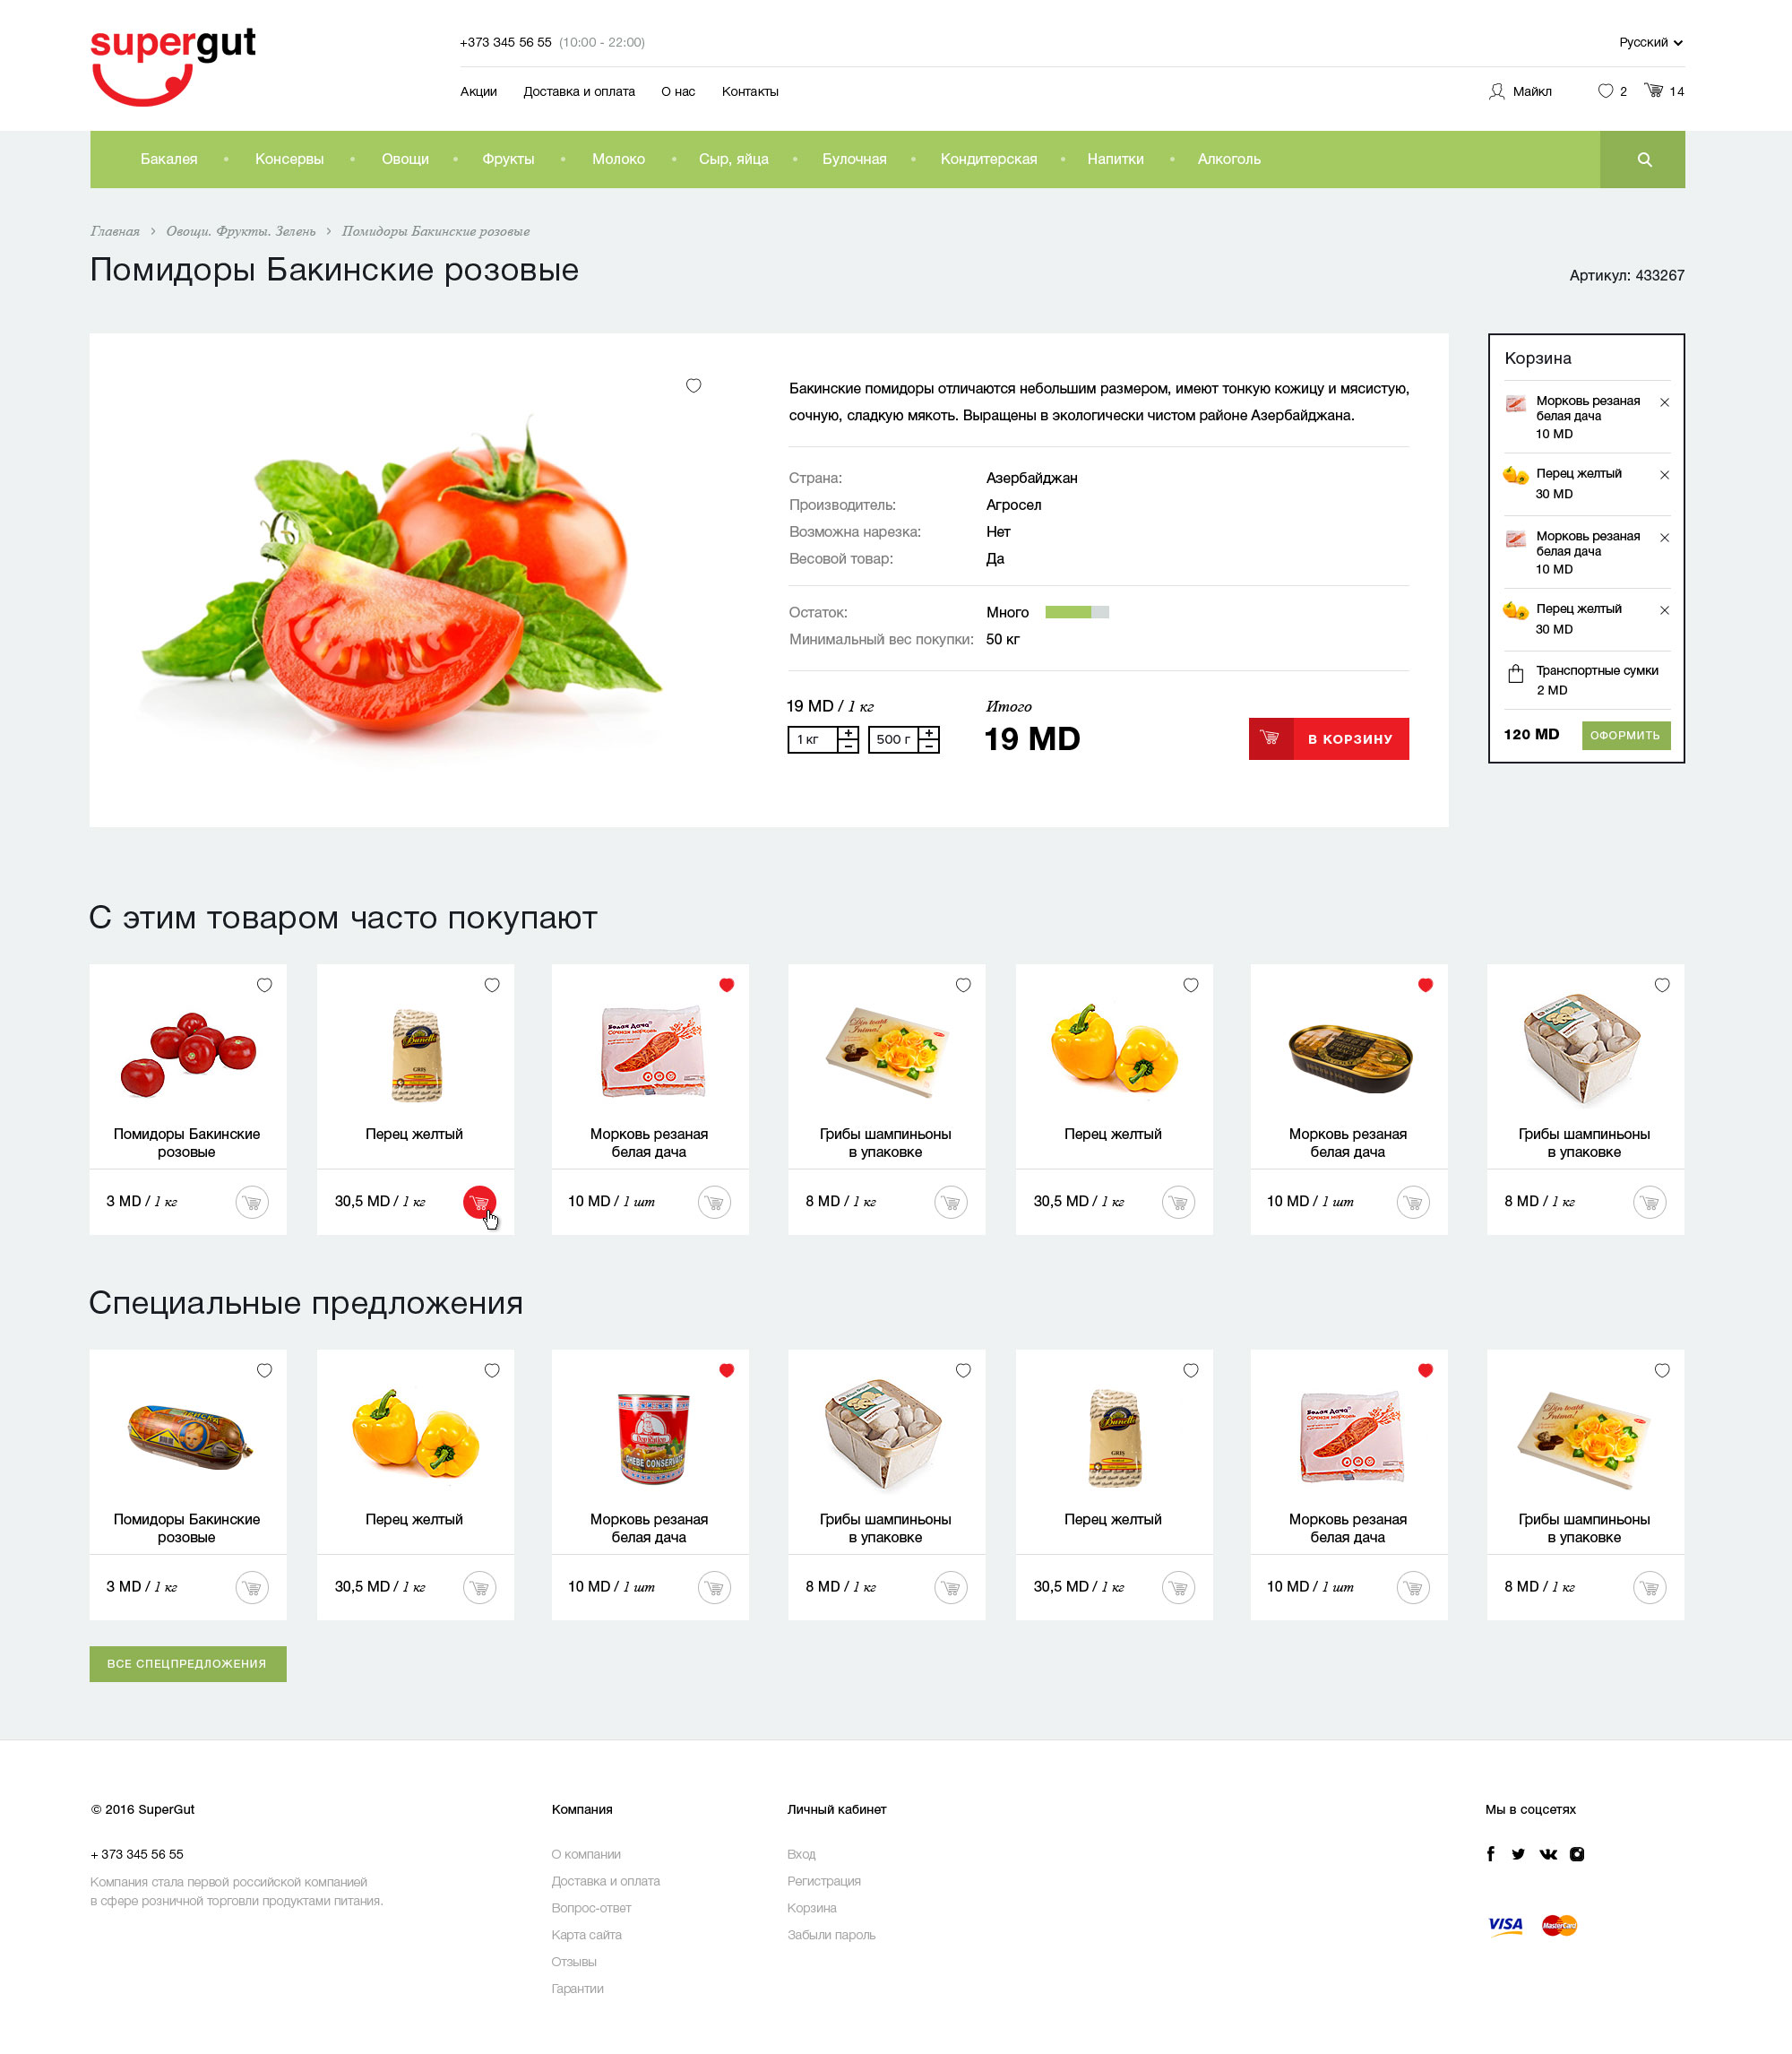 Supergut online supermarket